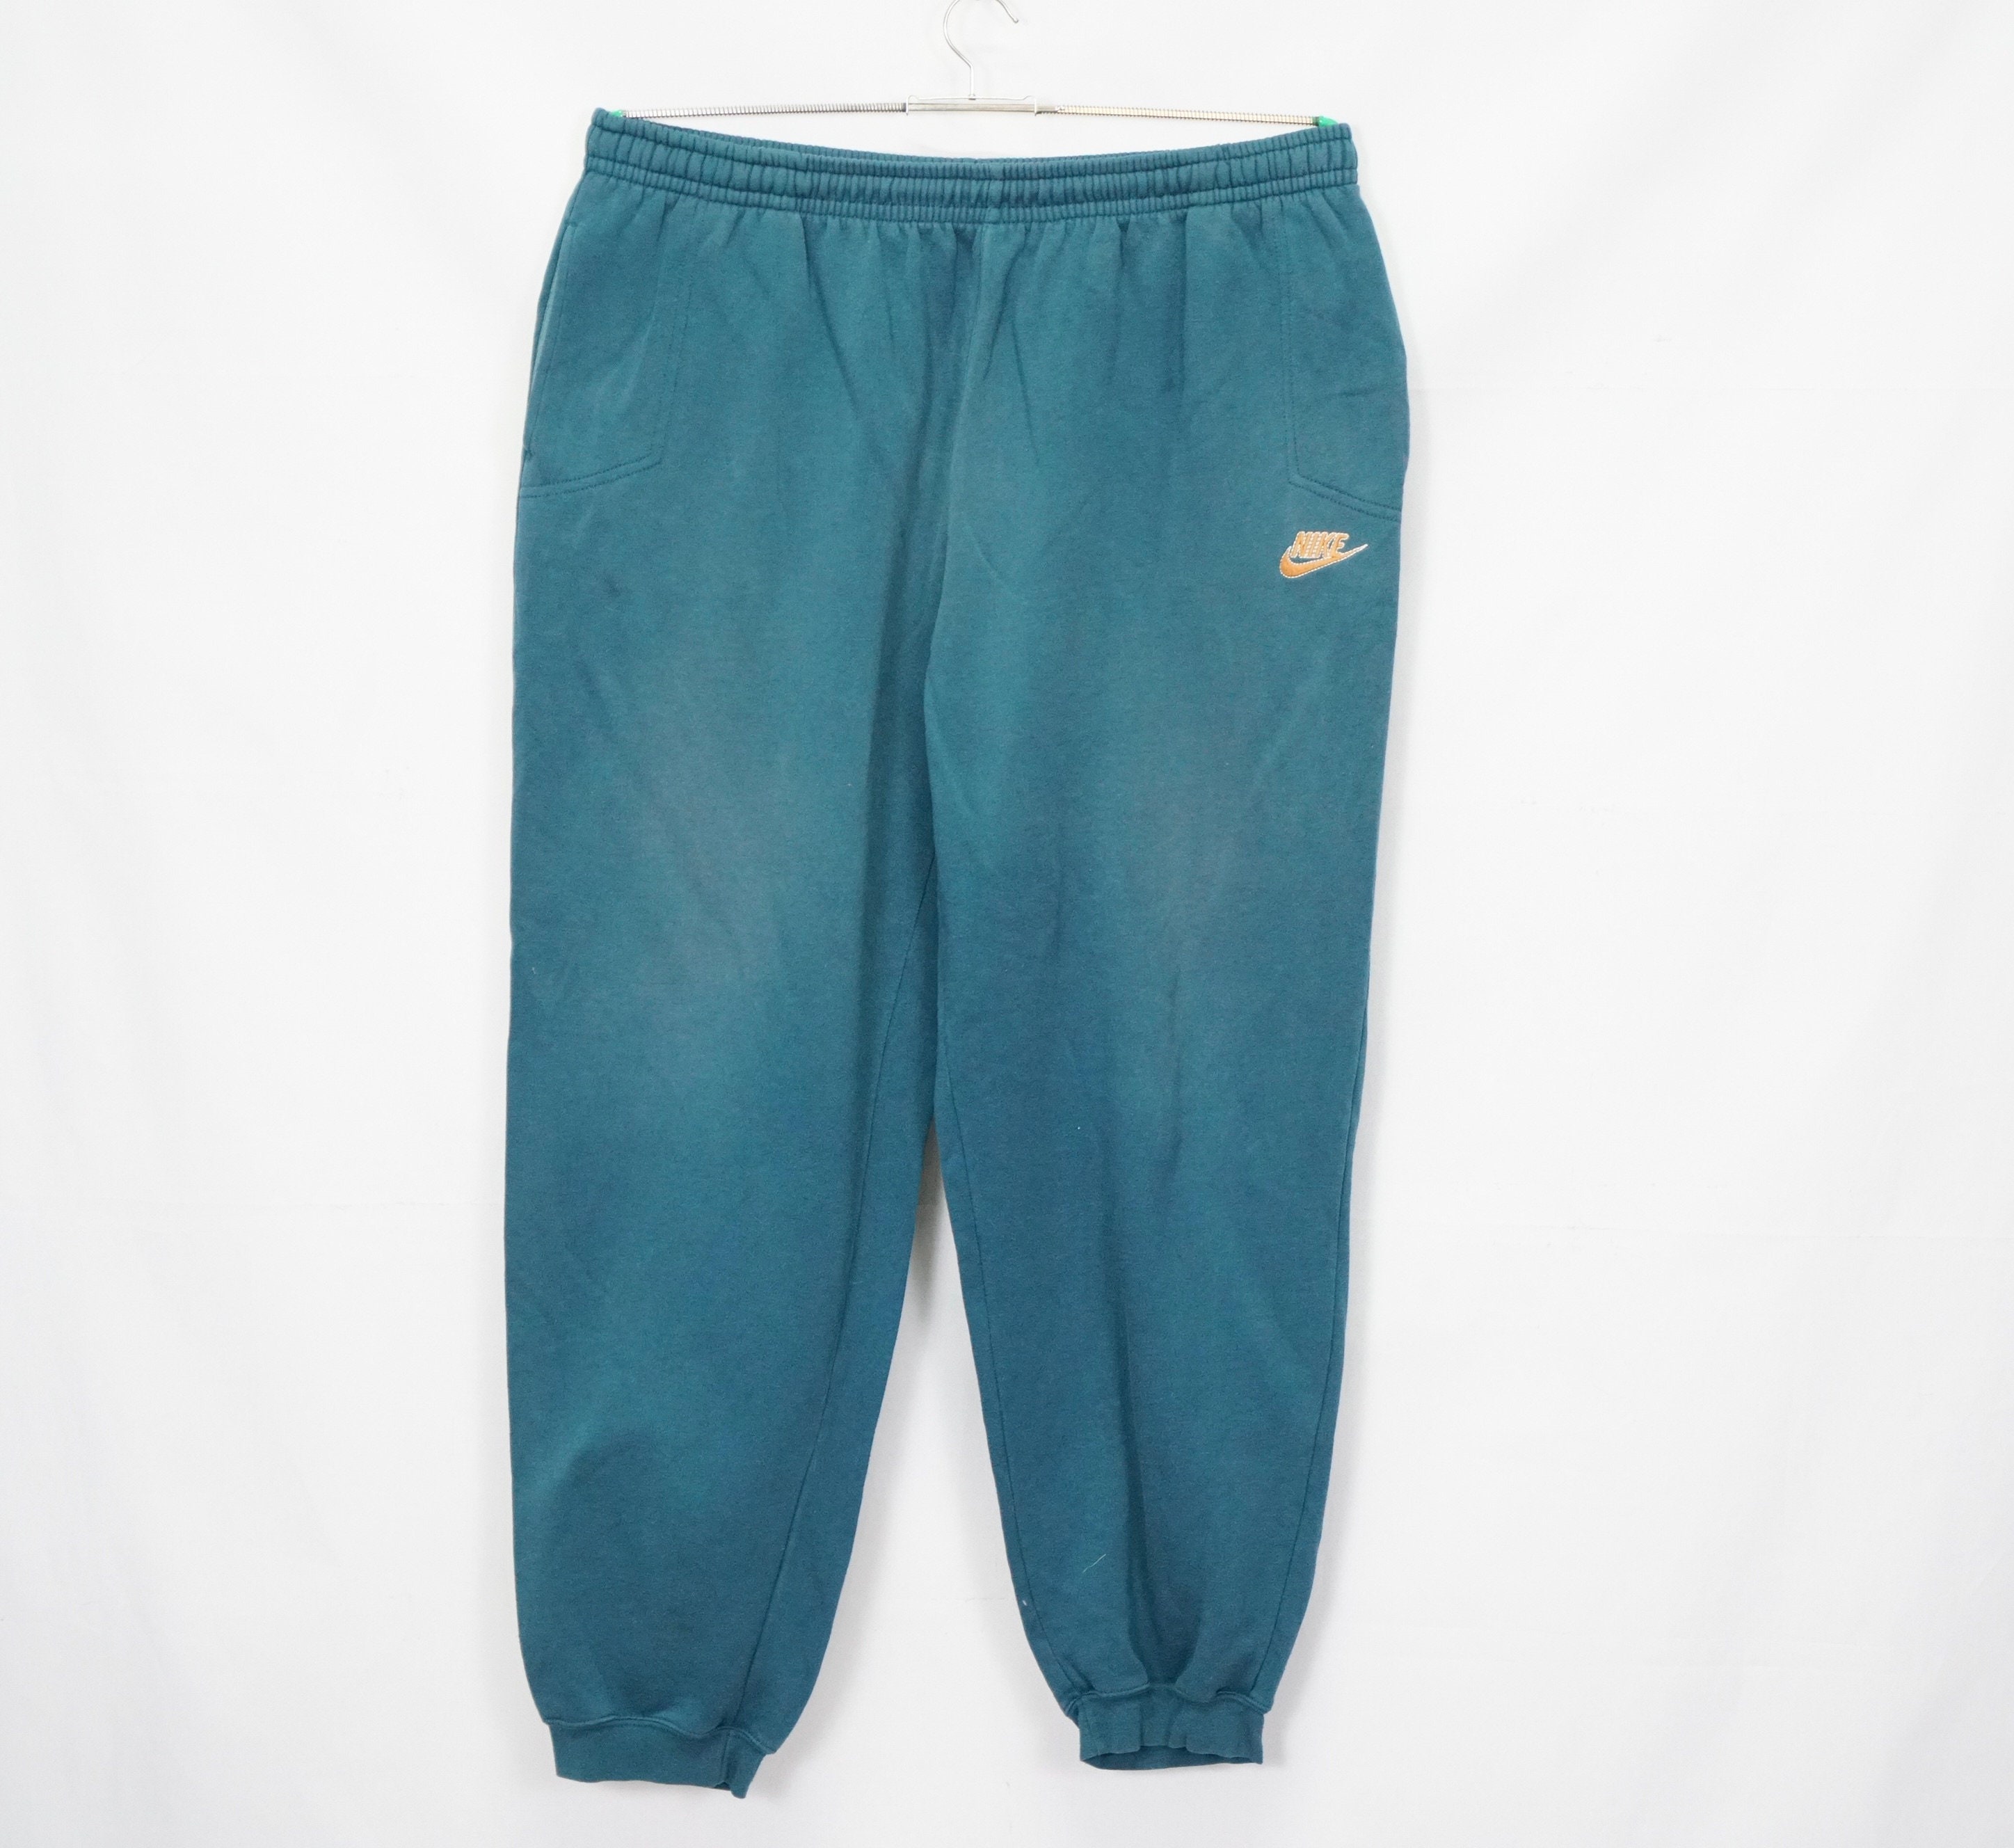 Vintage Nike Jogging Pants Track Pants Sports Trousers Size XL